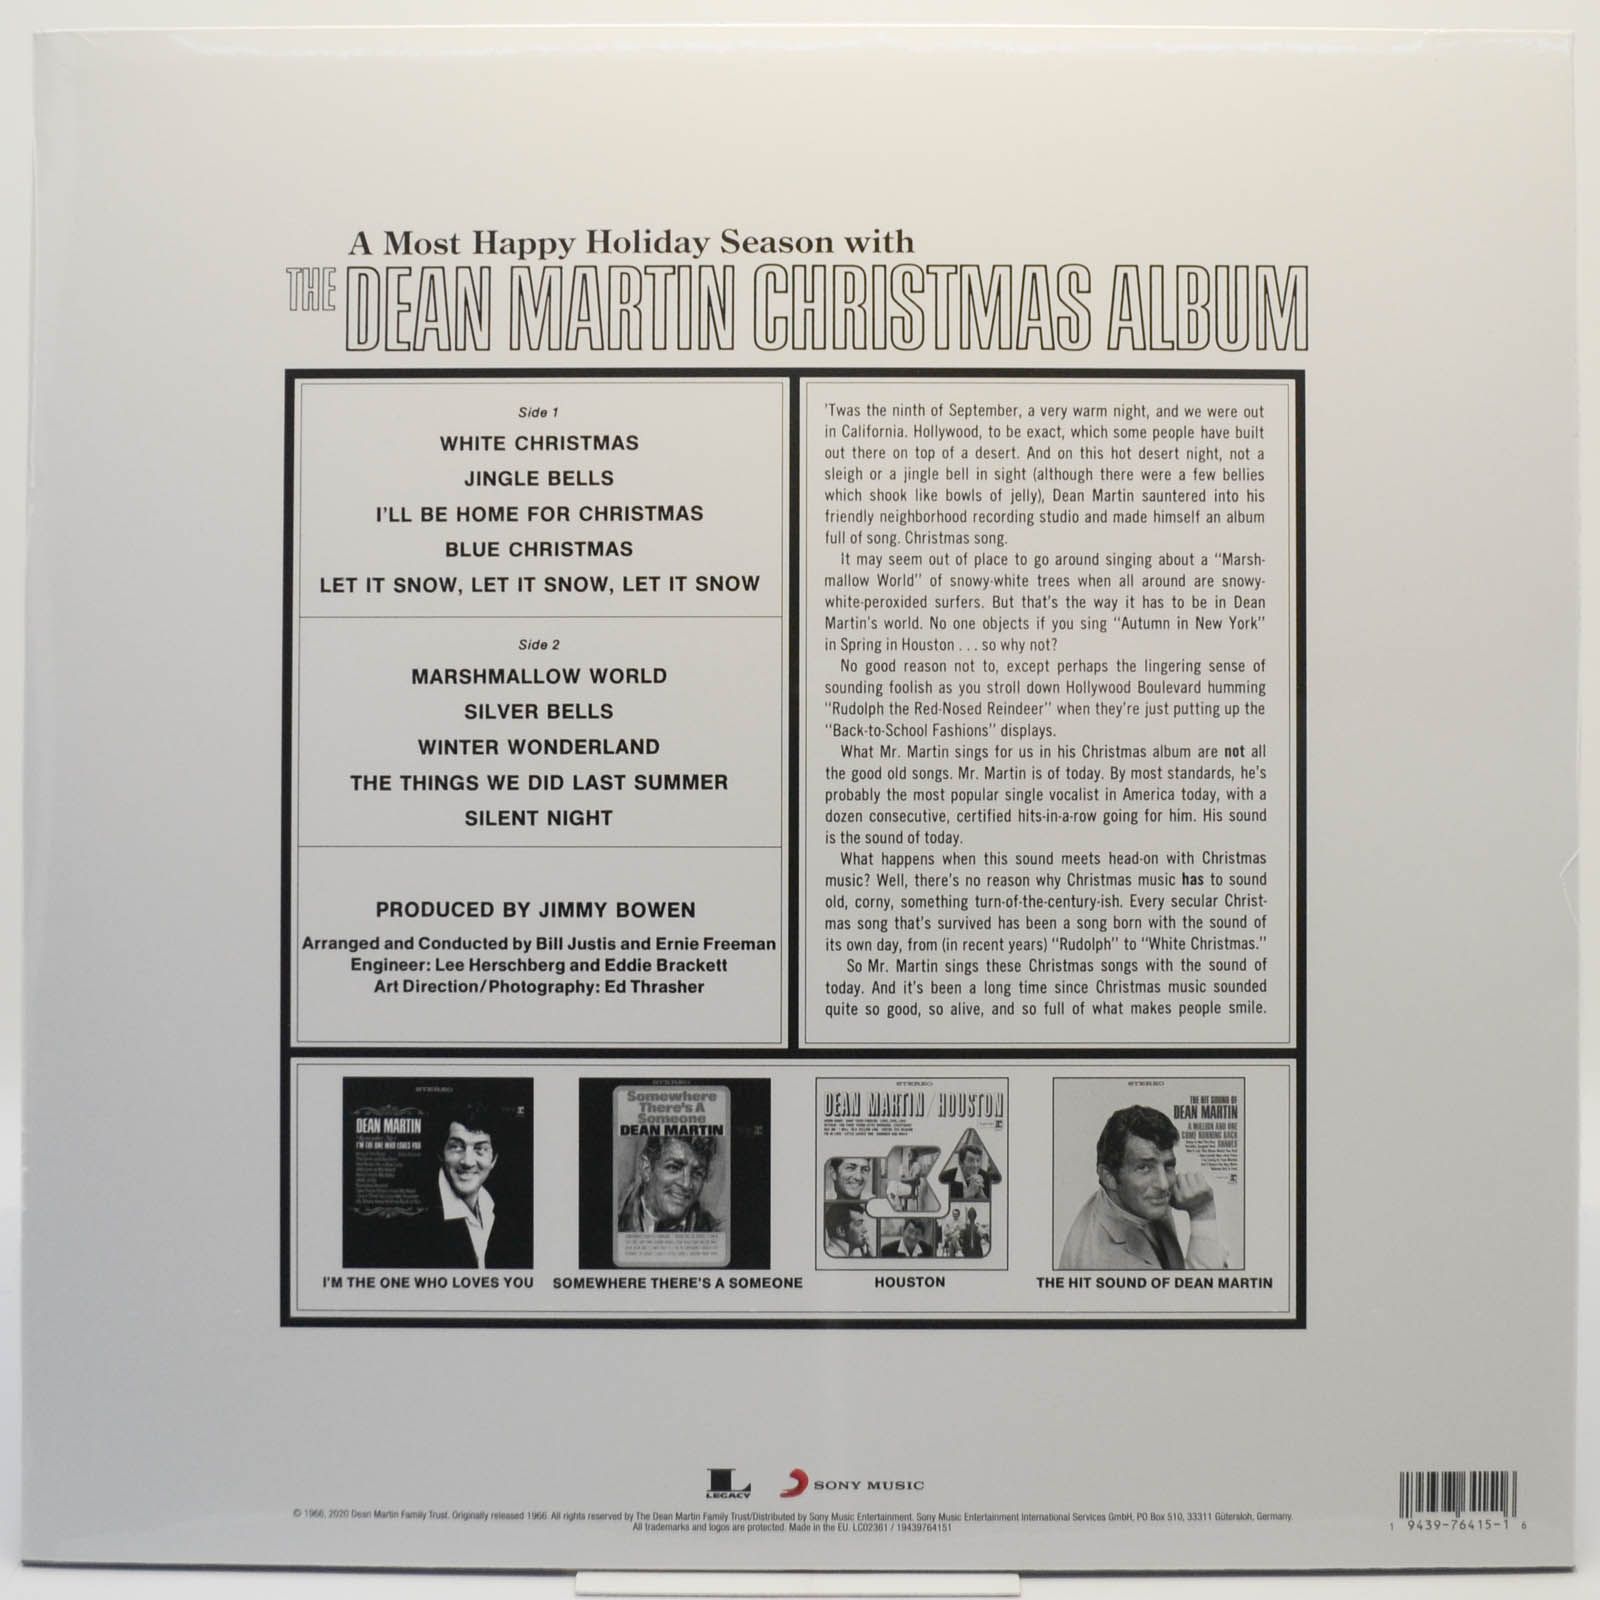 Dean Martin — The Dean Martin Christmas Album, 1966